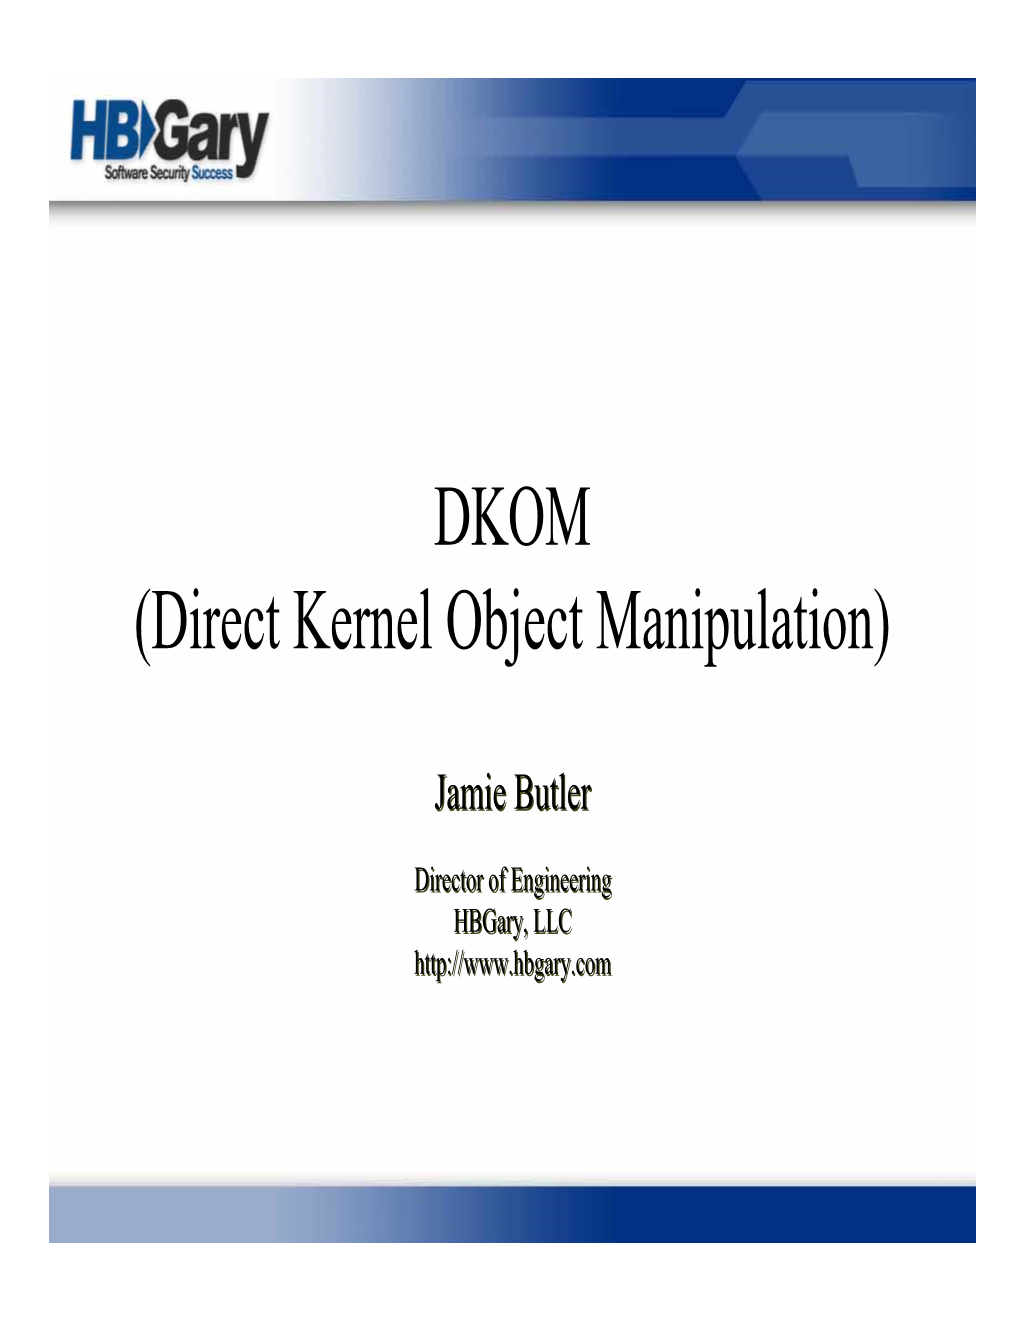 Direct Kernel Object Manipulation)